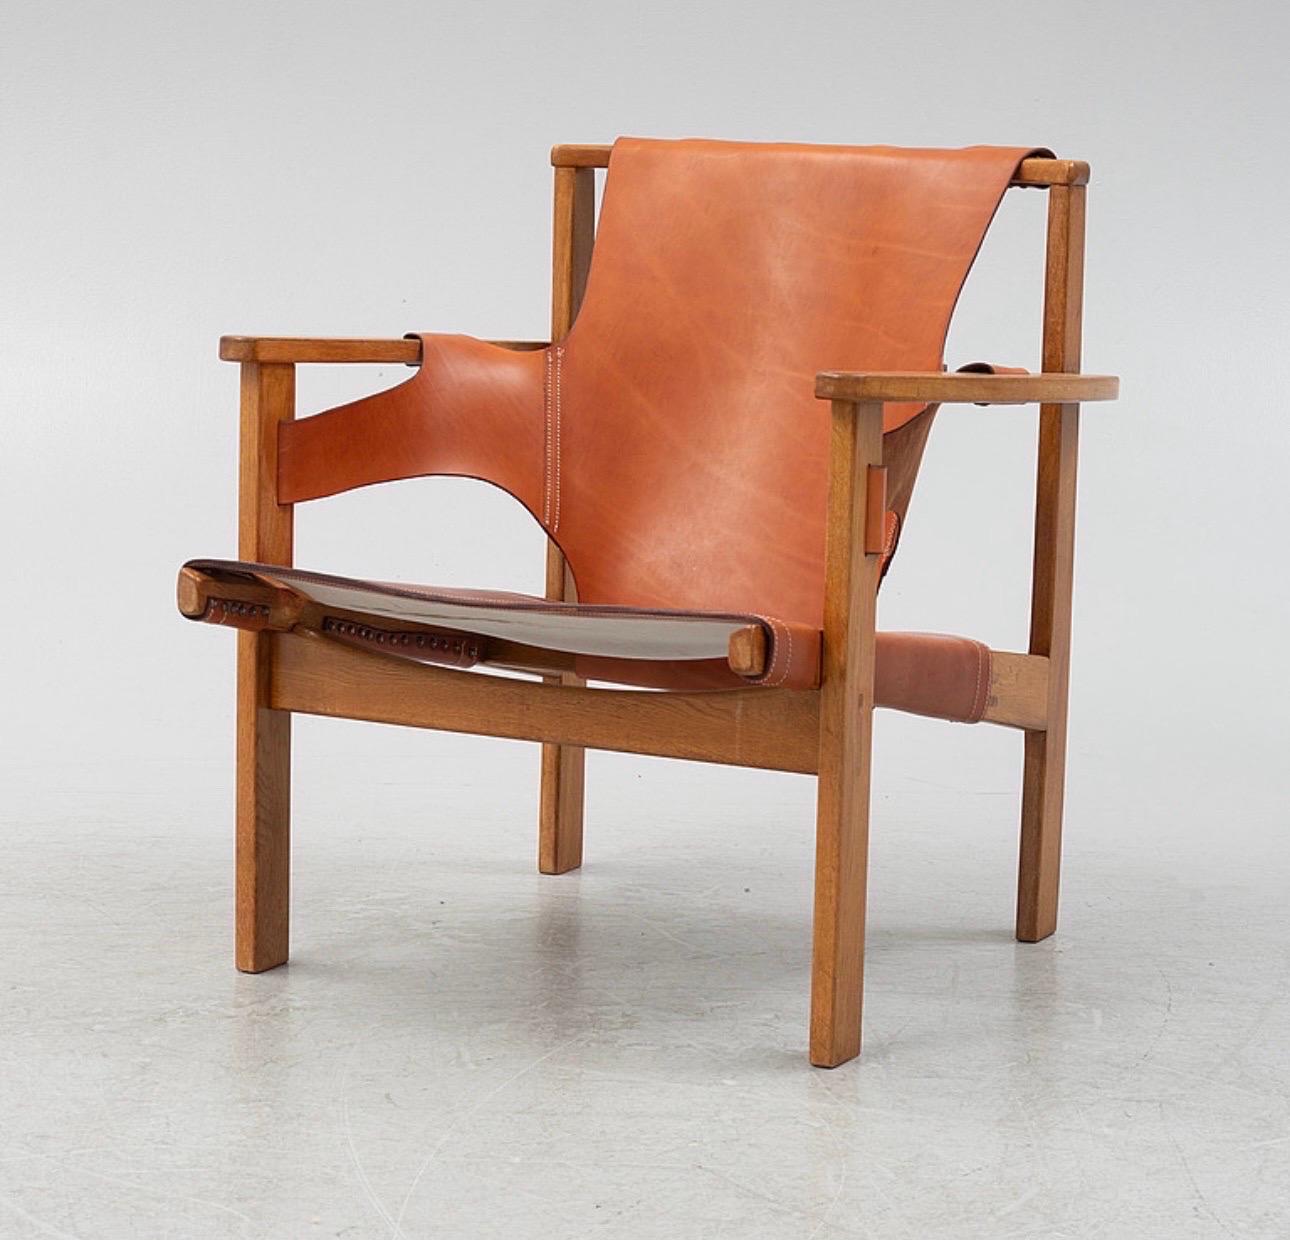 Carl-Axel Acking Trienna chair in Oak, Sweden 1960s for Nordiska Kompaniet. 
Seat height 35cm, width 69cm. 

